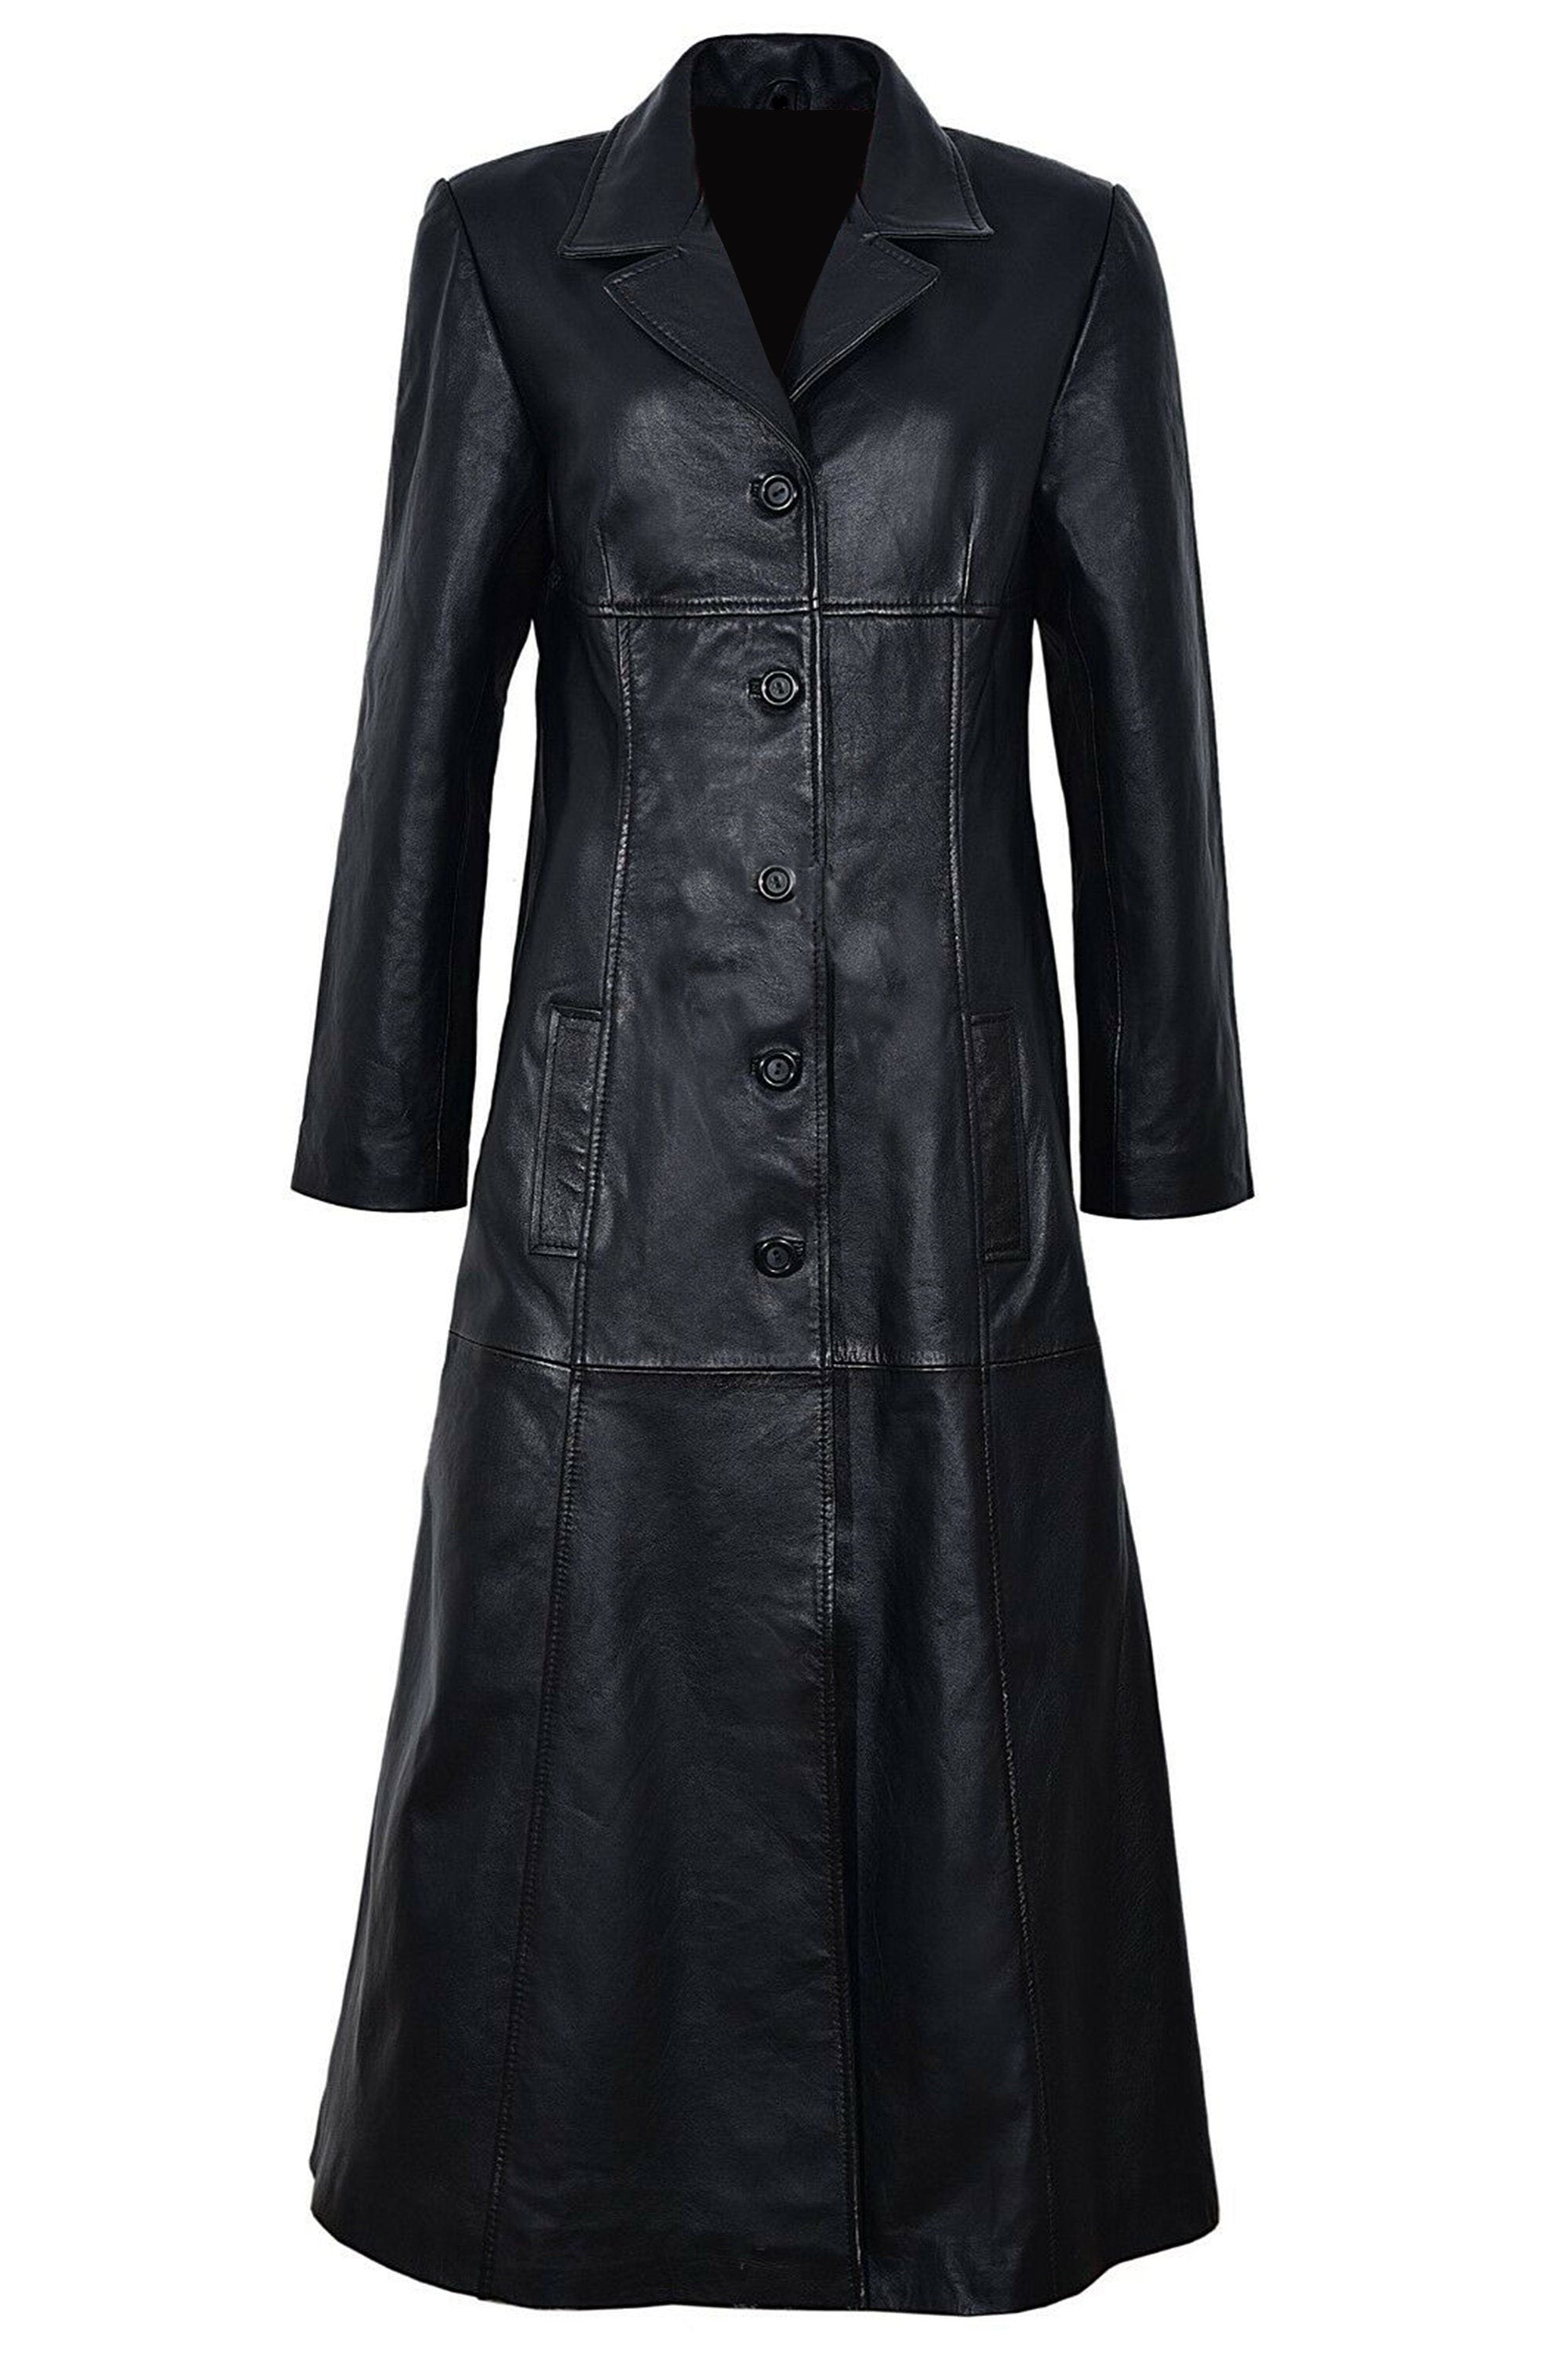 Vintage Black Leather Trench Coat Women